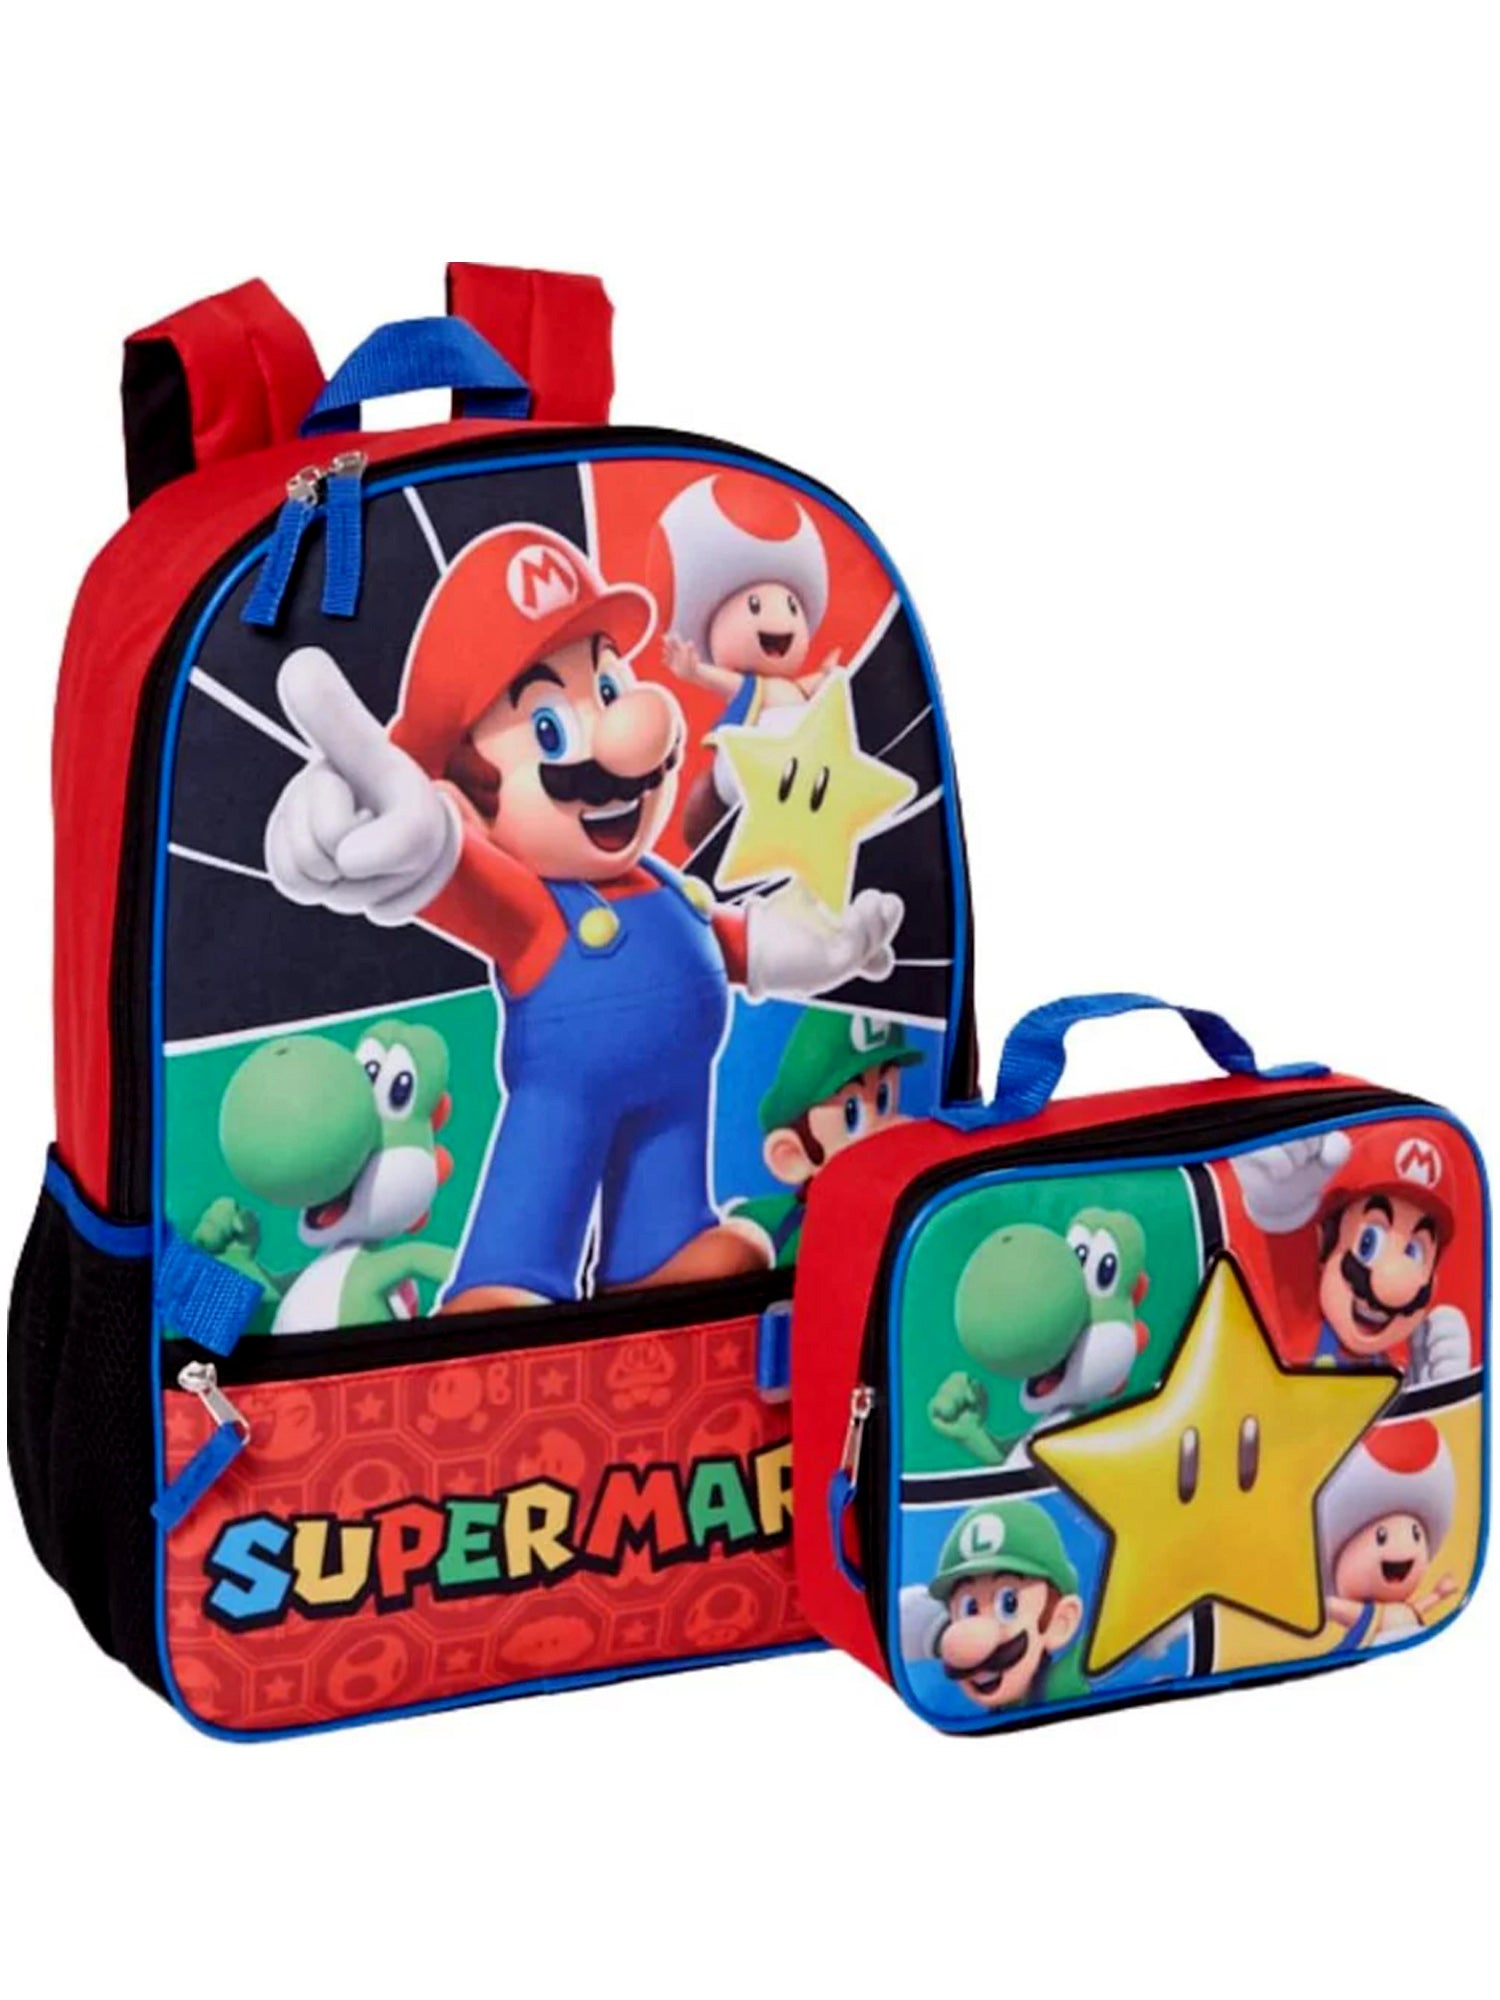 Nintendo Super Mario Backpack 16" & Insulated Lunch Bag Detachable Luigi Yoshi